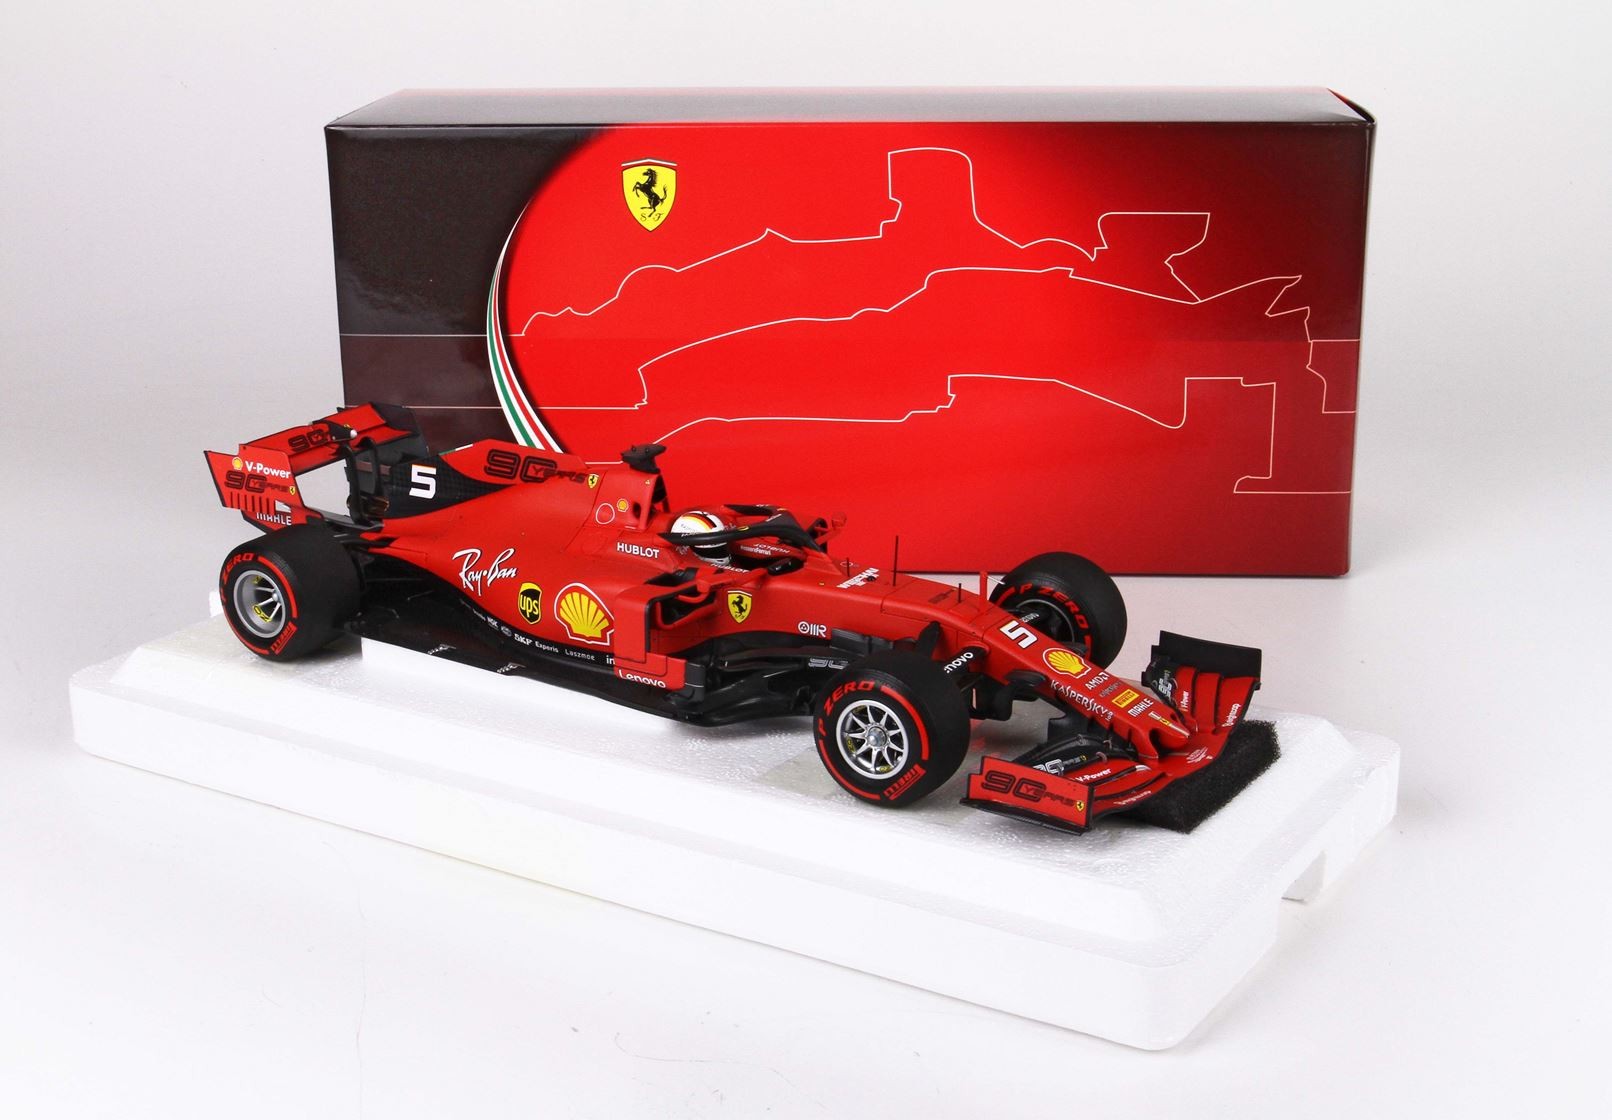 BBR - Ferrari SF90 Vettel #5, GP Italy 2019: BBR191835DIE